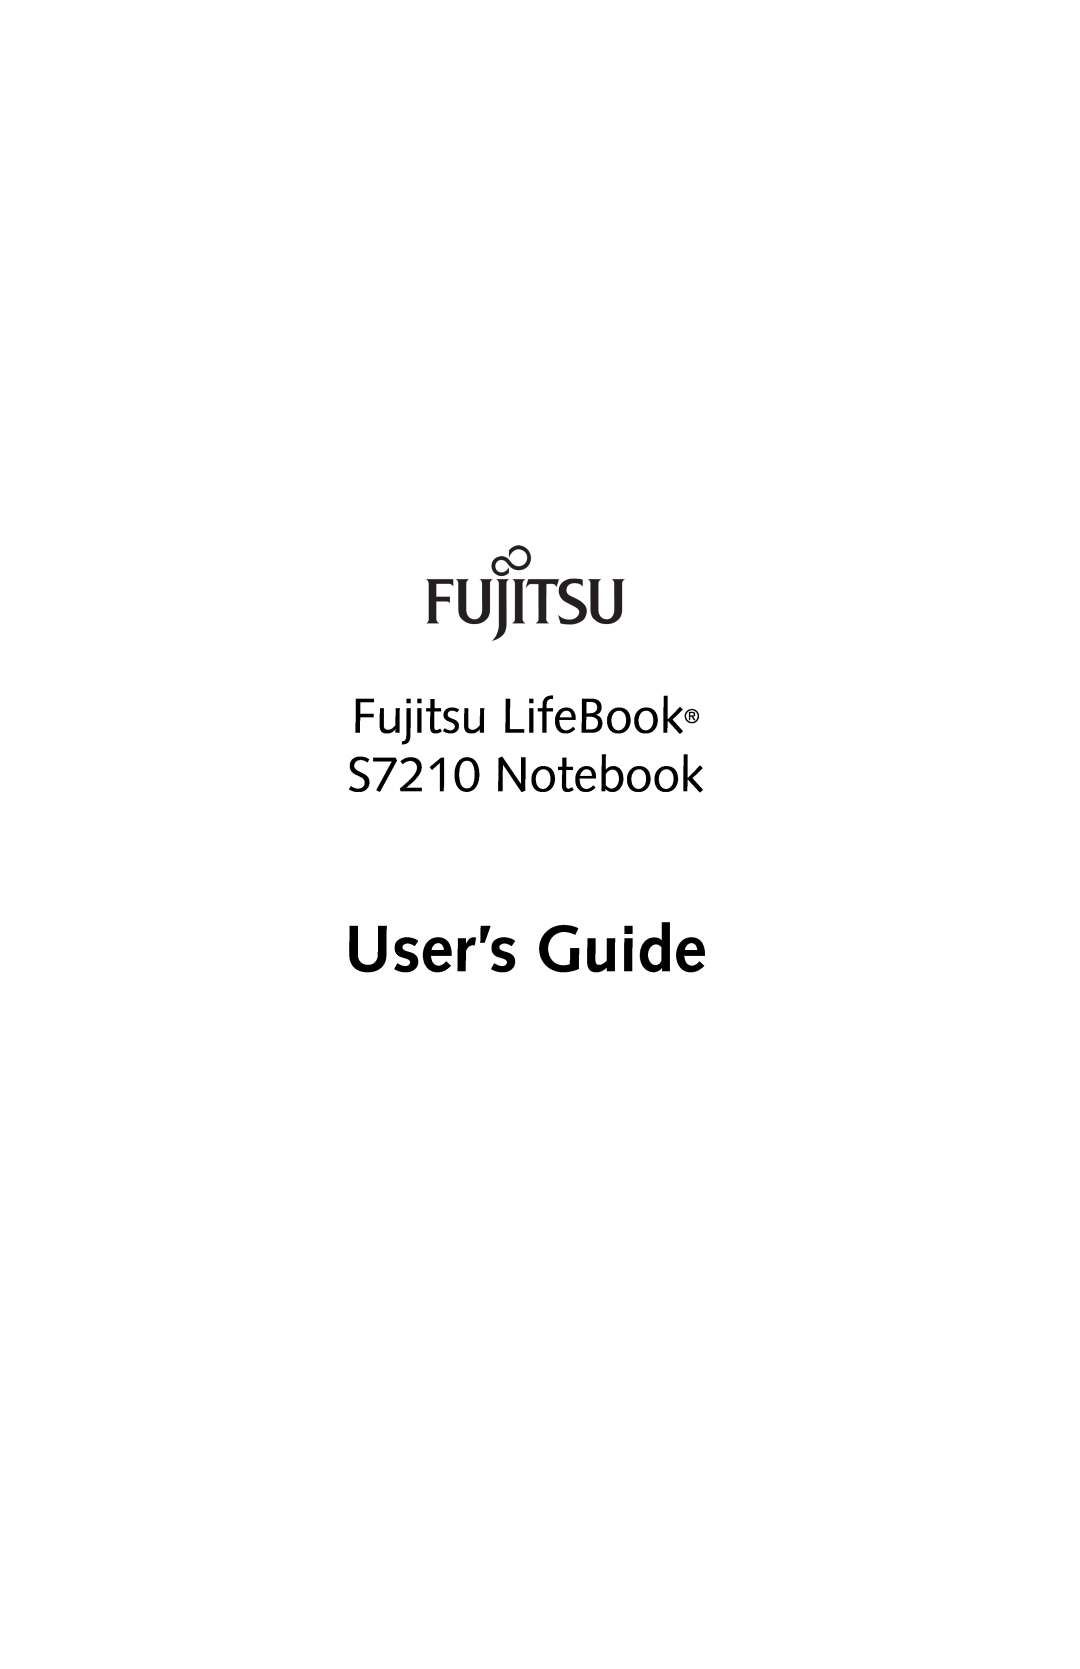 Fujitsu manual User’s Guide, Fujitsu LifeBook S7210 Notebook 